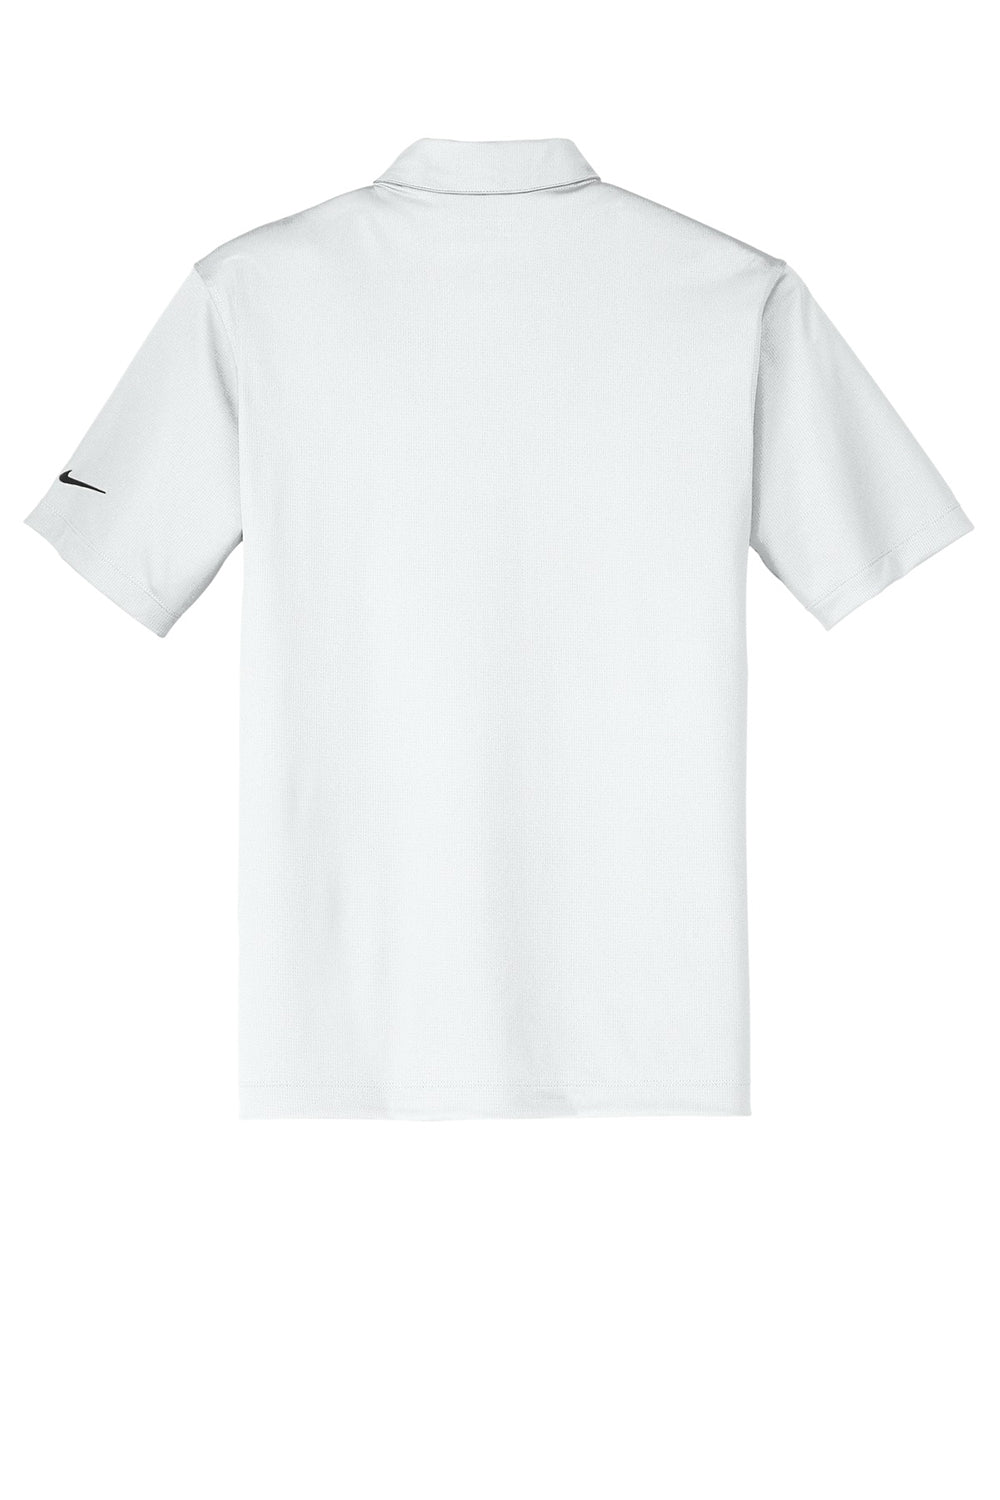 Nike 637167 Mens Dri-Fit Moisture Wicking Short Sleeve Polo Shirt White Flat Back